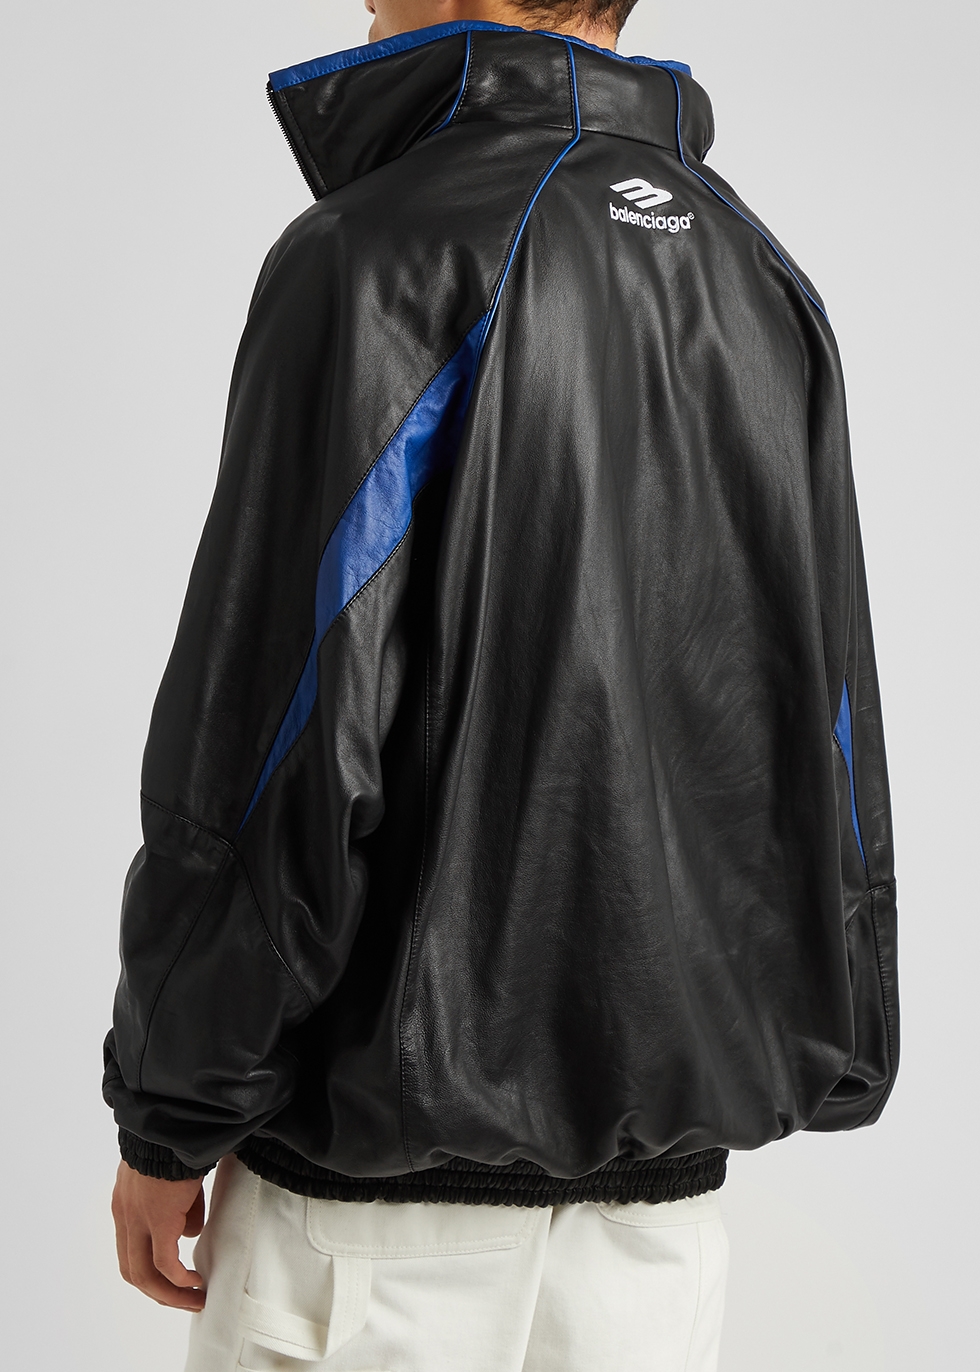 Balenciaga Womens OffTheShoulder Leather Biker Jacket  1069Noir Noir   Balmain clothing Best leather jackets Jackets